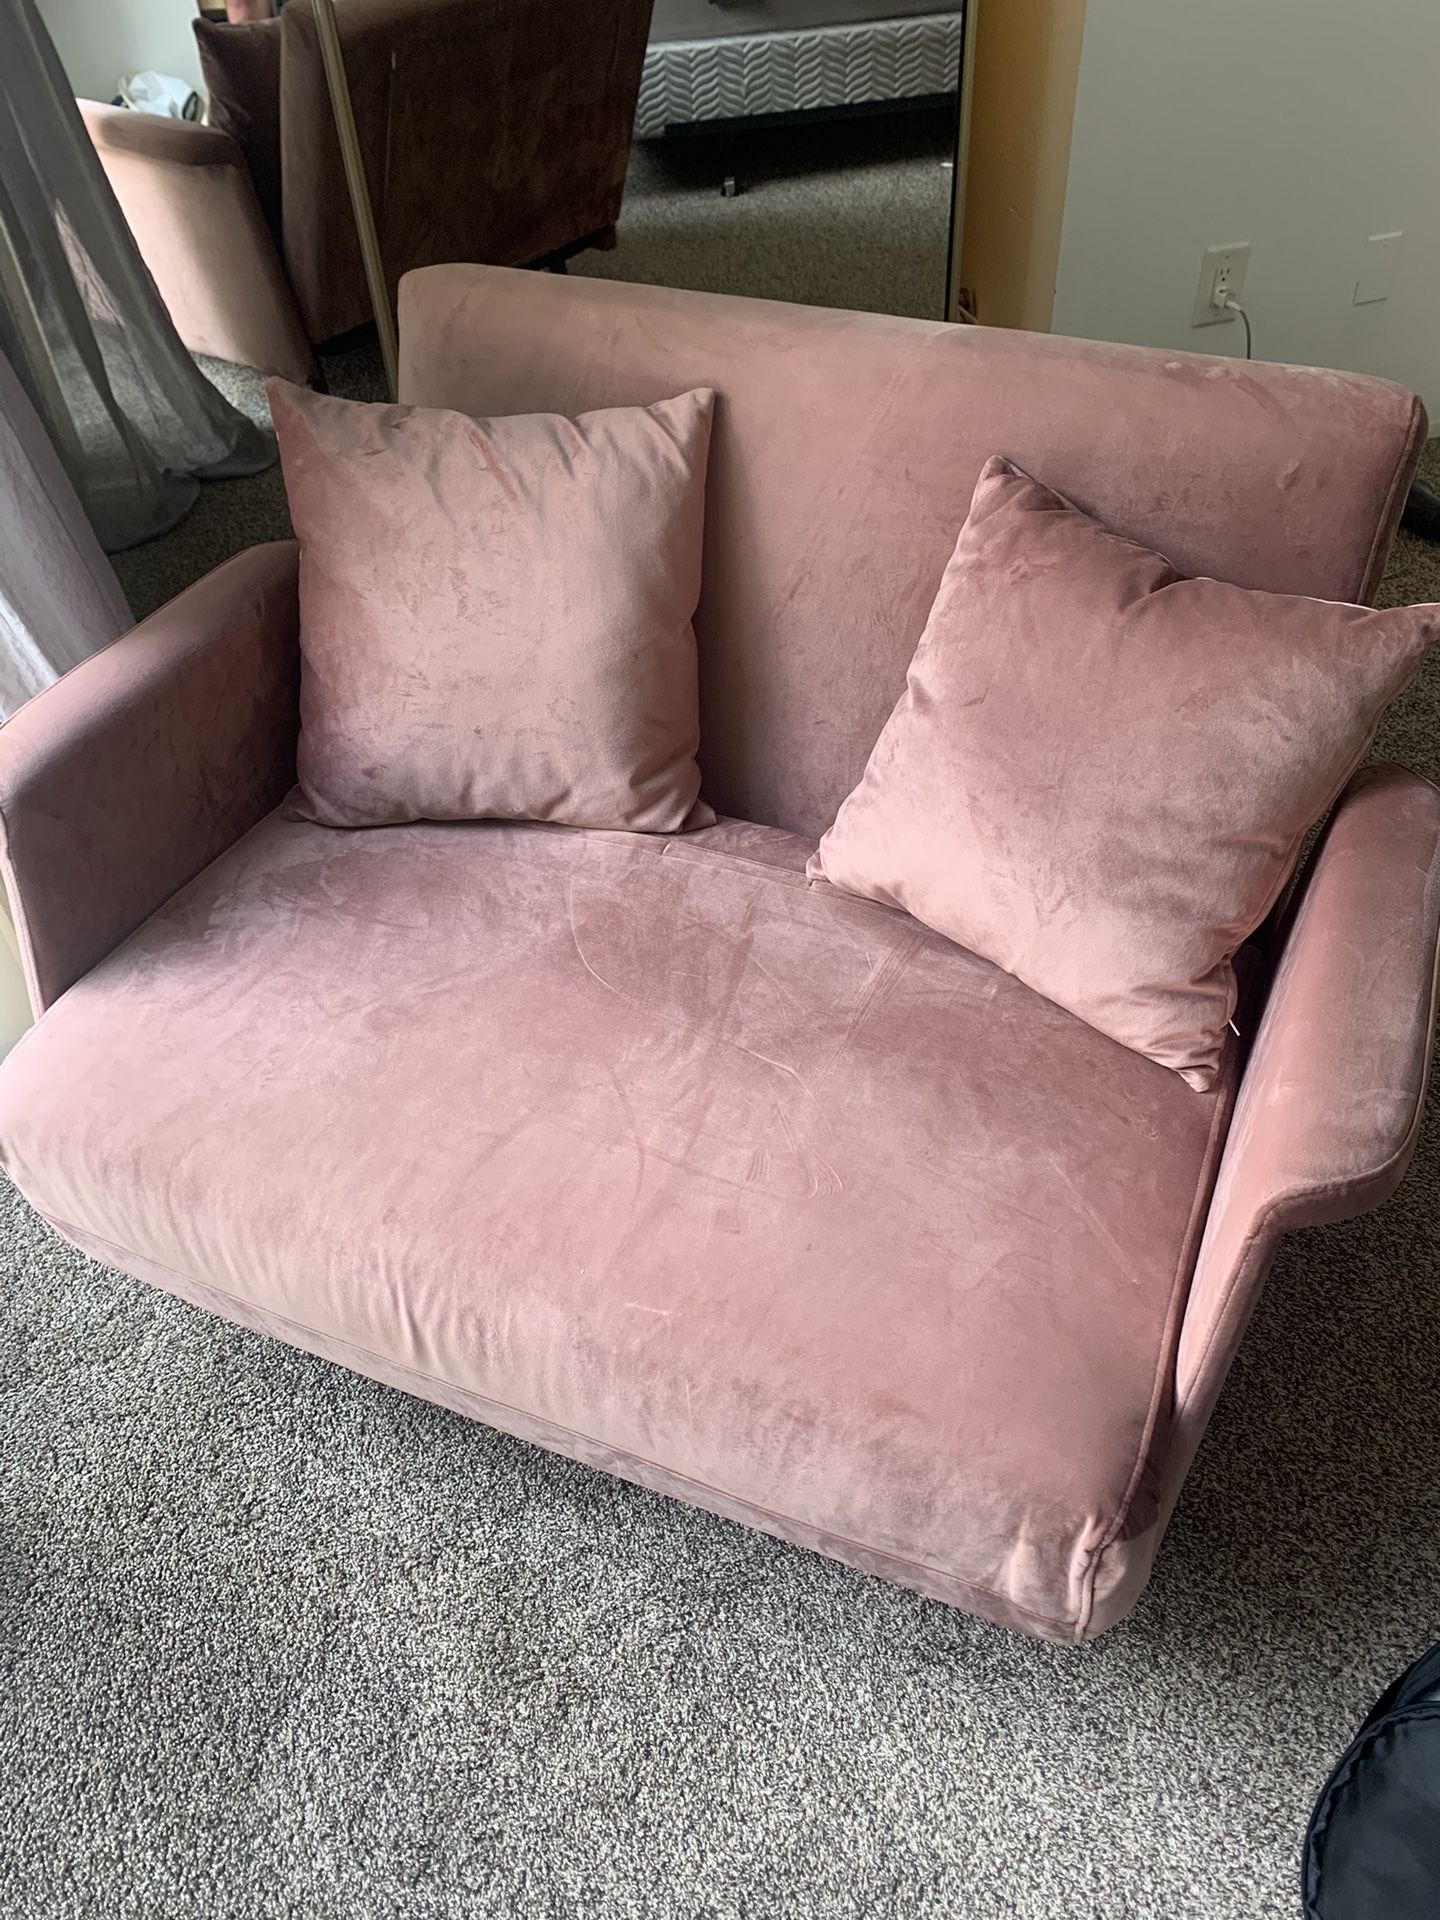 Pink Love Seat